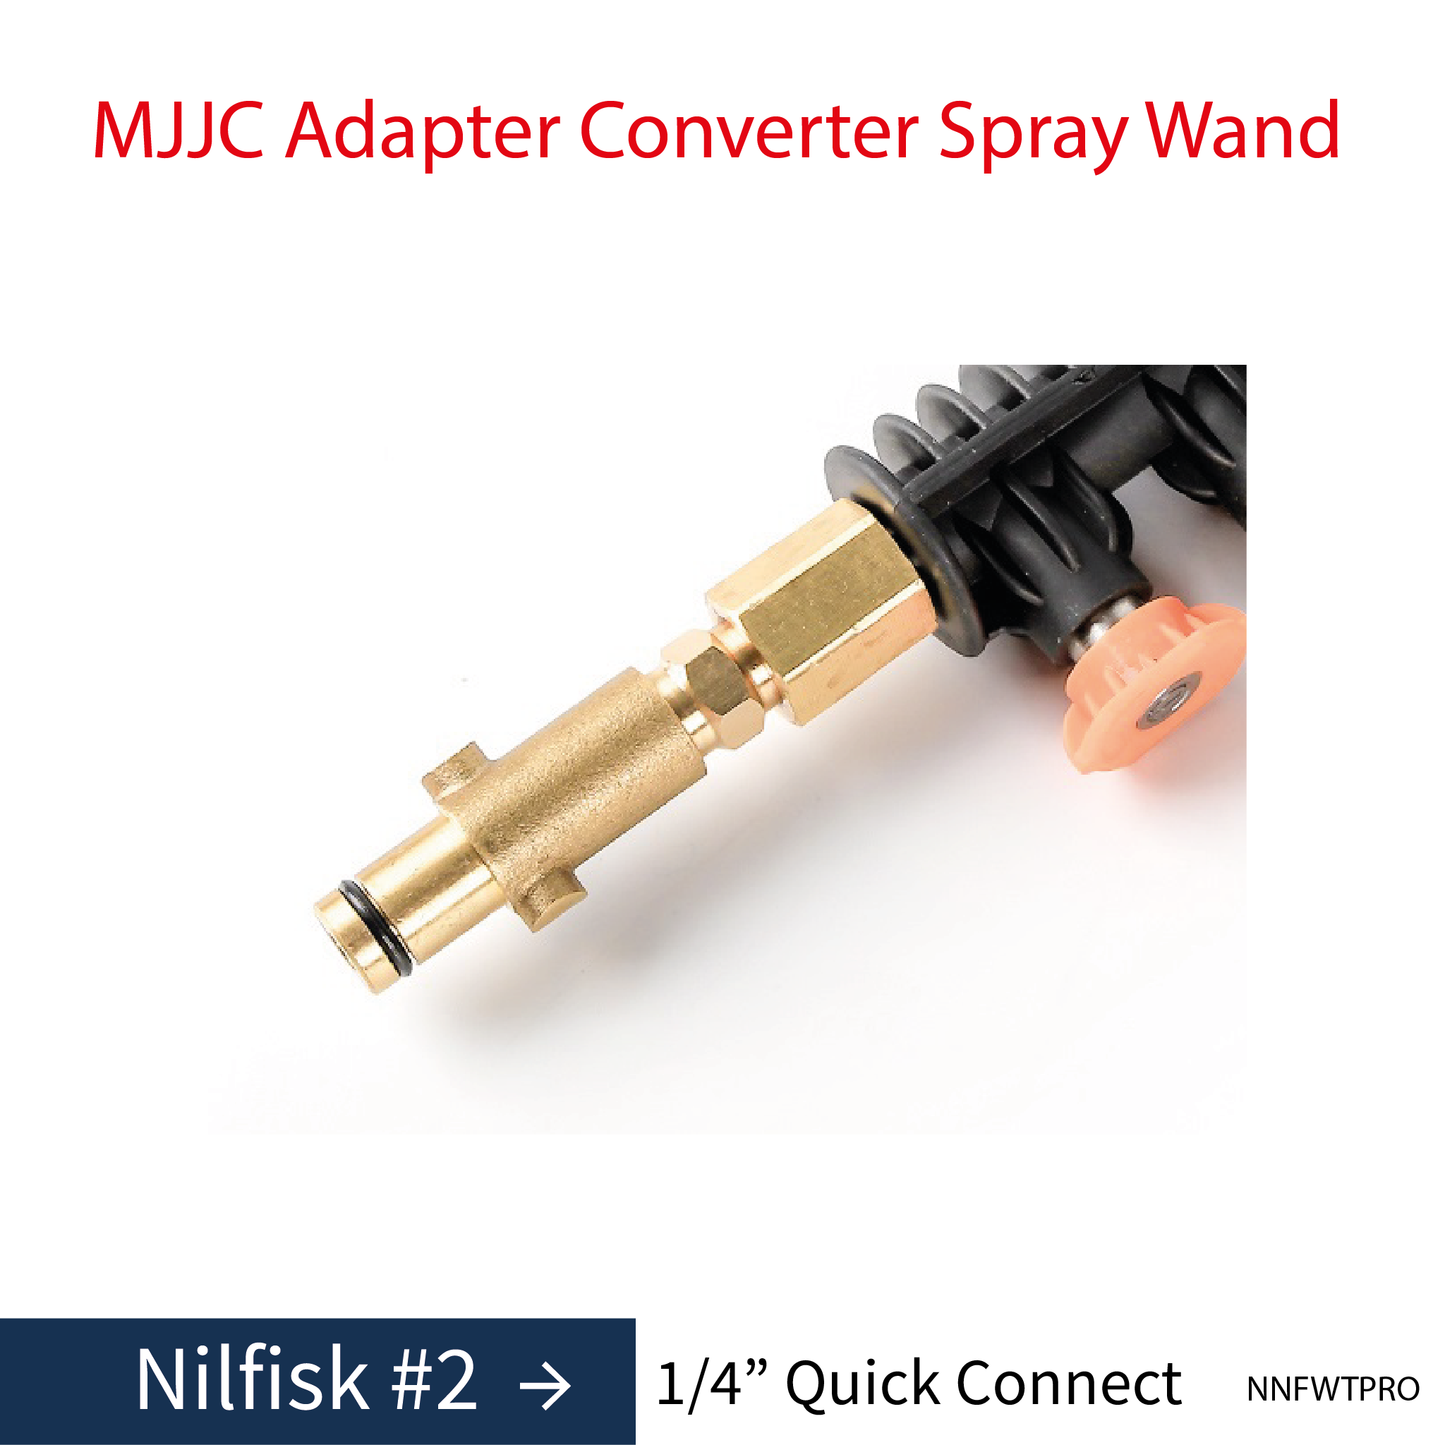 Nilfisk MJJC Adapter Conversion Converter pressure washer Spray Wand with 5 spray tips